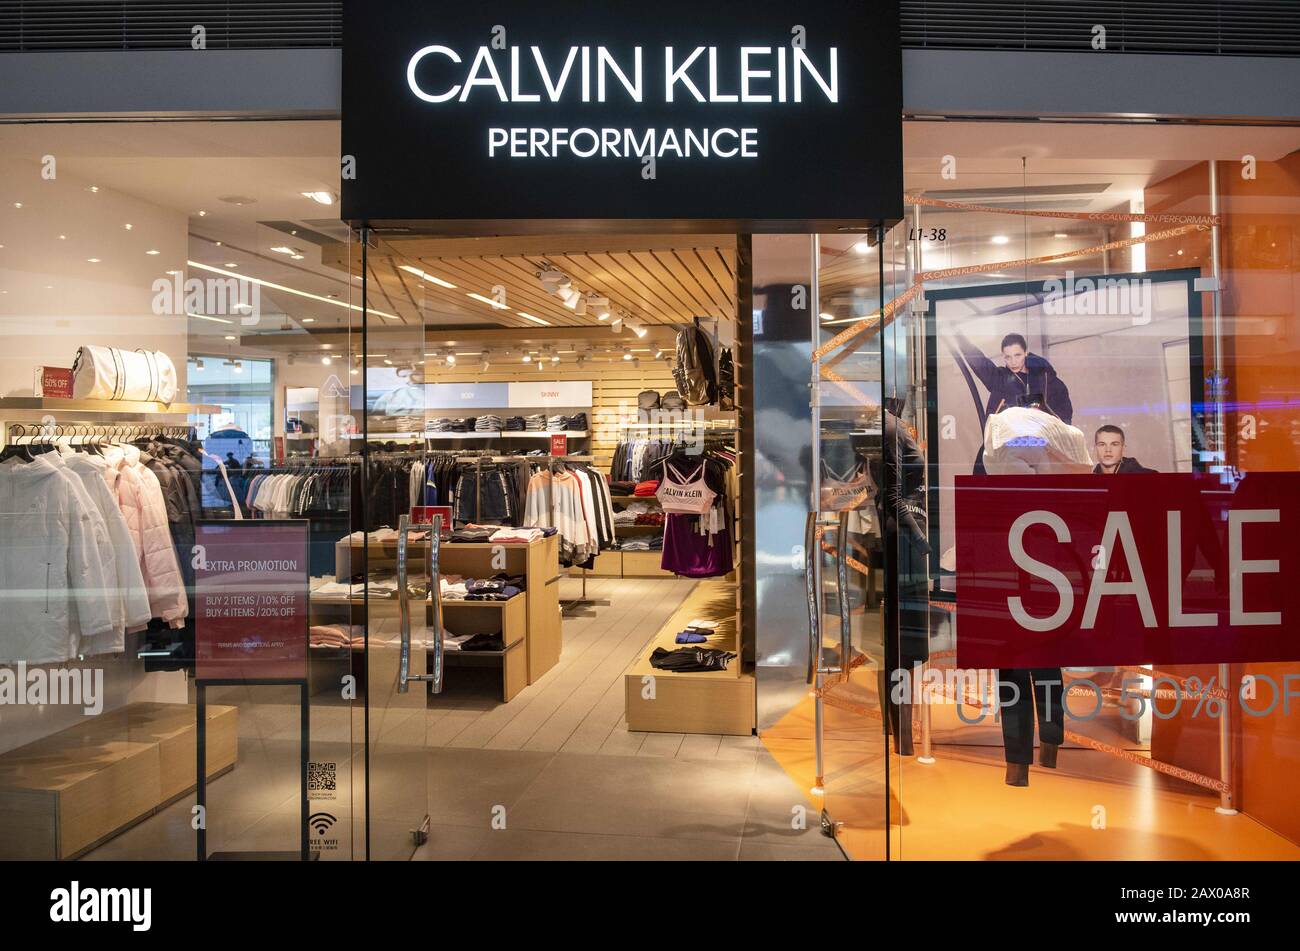 Calvin Klein San Francisco Outlet Top Sellers, SAVE 52%.